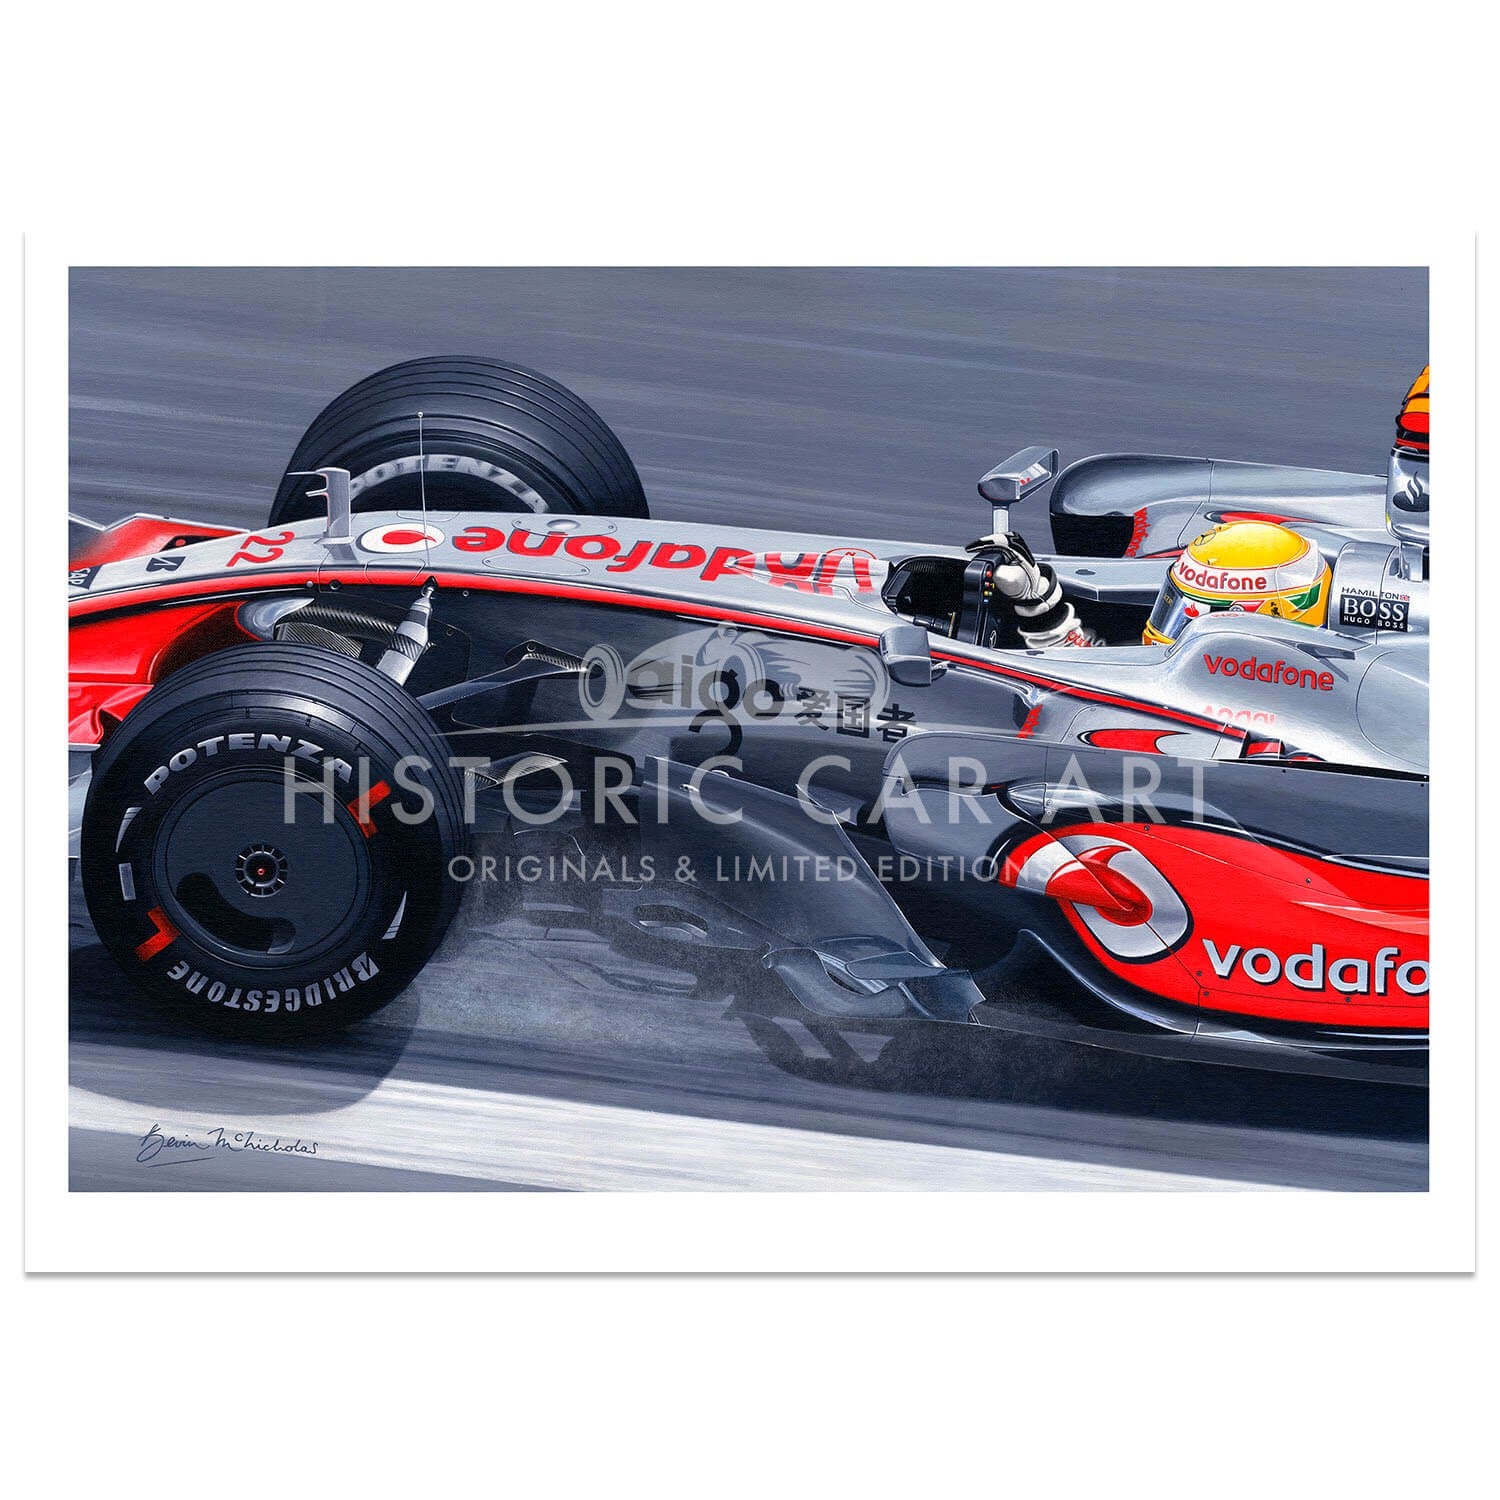 Lewis | Lewis Hamilton | McLaren MP4-23 | Formula 1 | Art Print